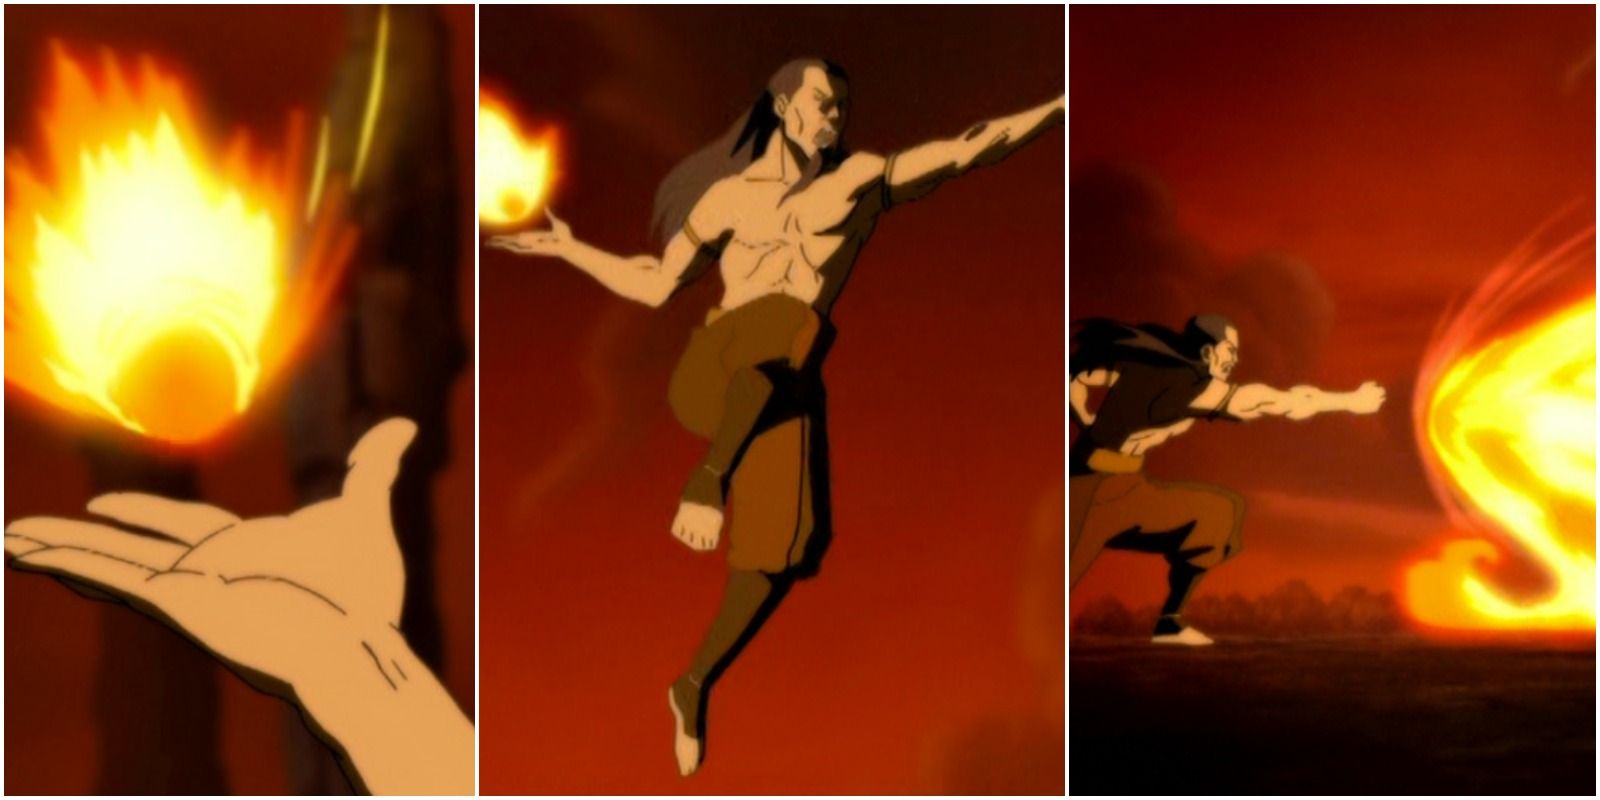 Ozai using firebending in The Last Airbender finale. 